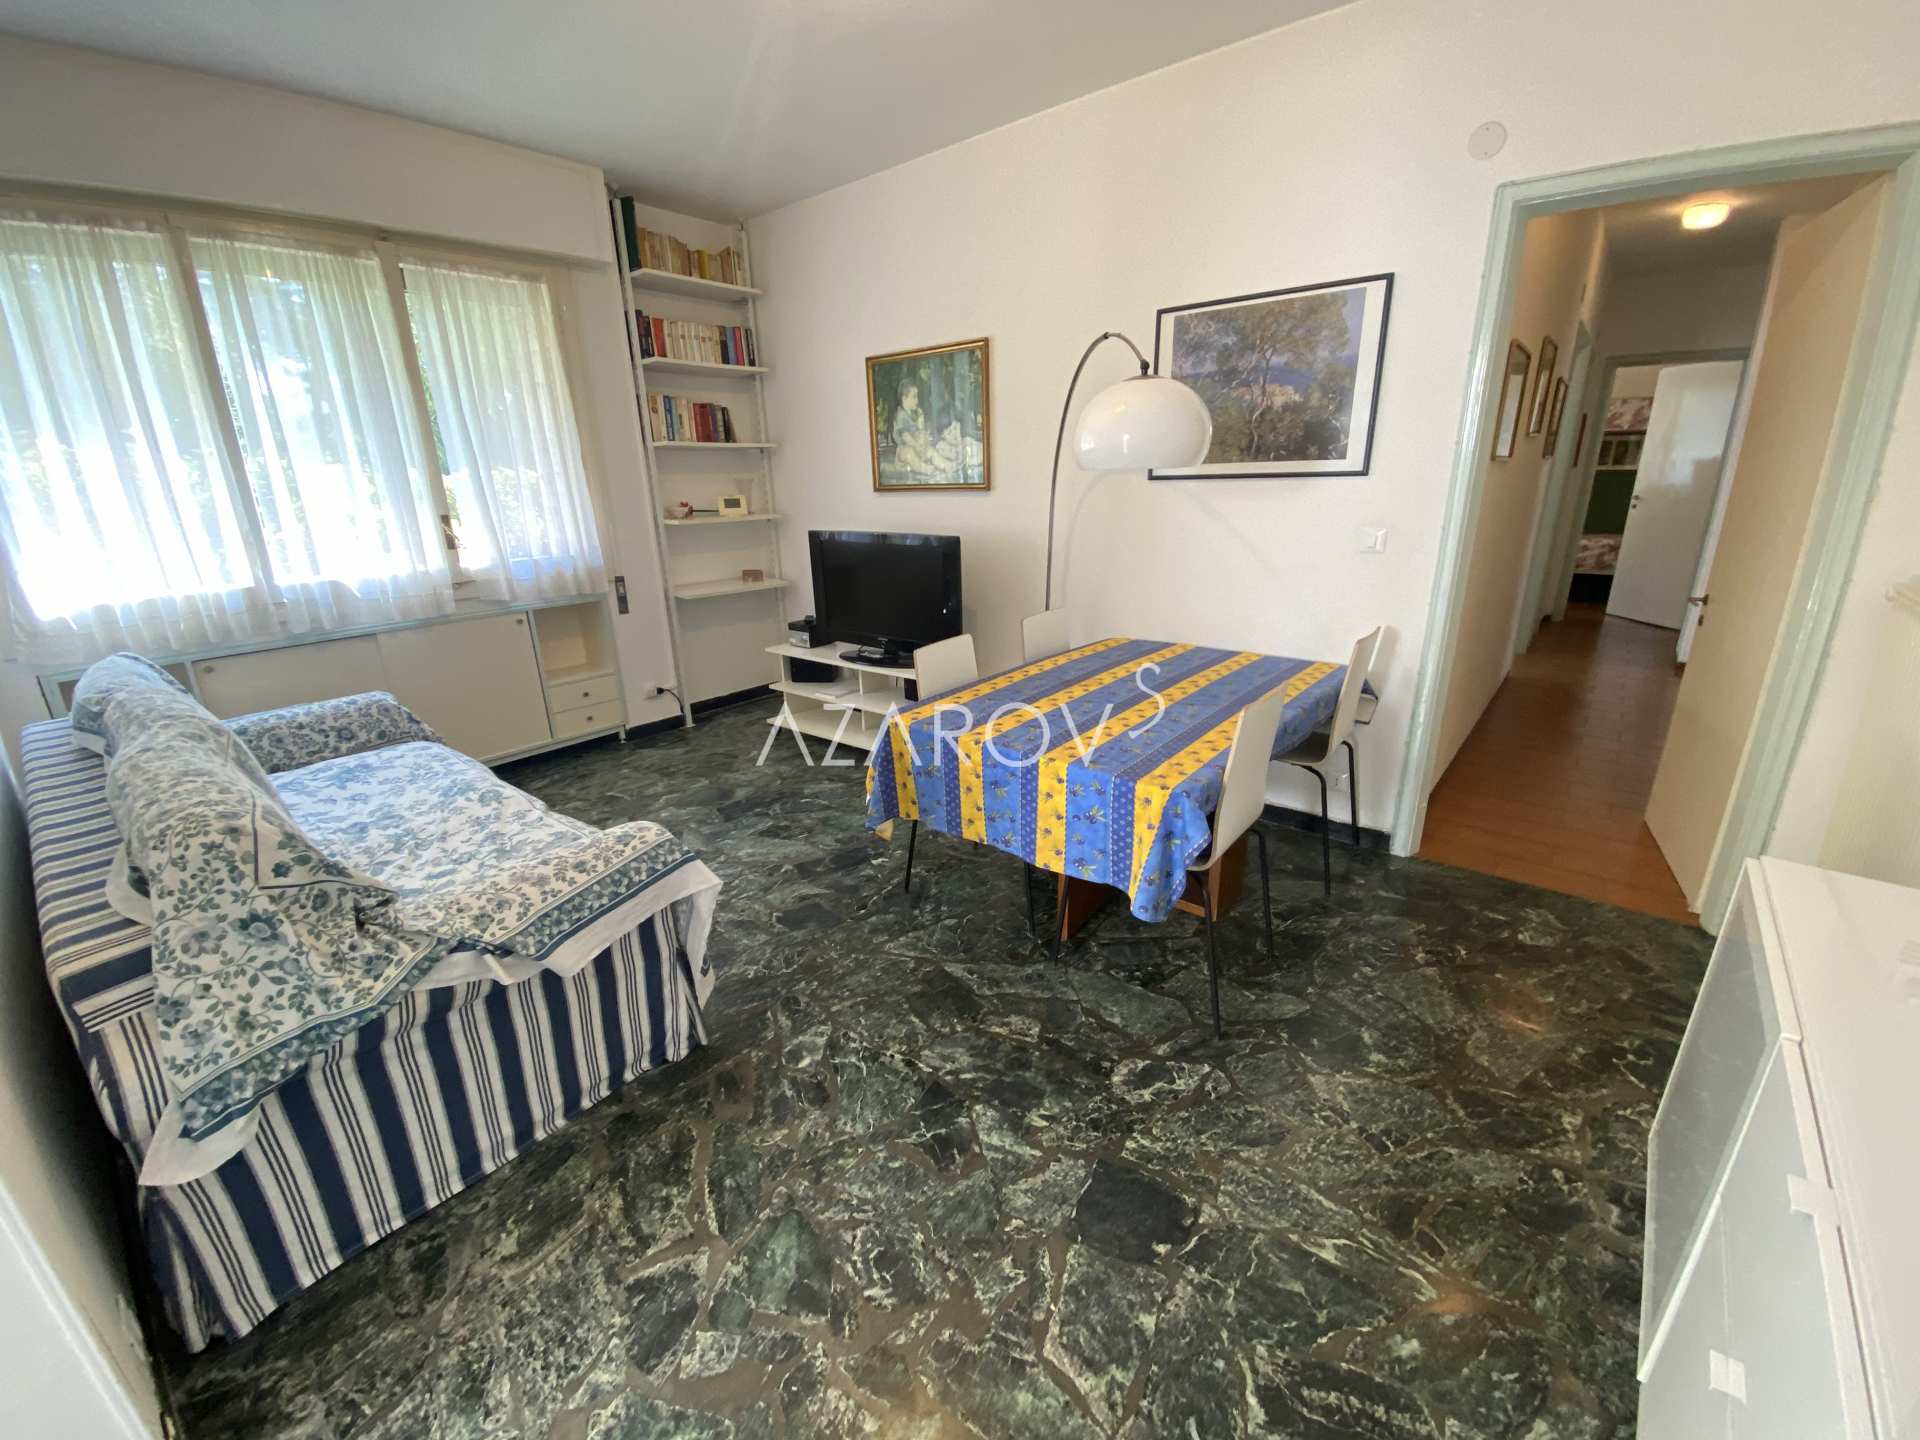 Appartement in Sanremo met strand